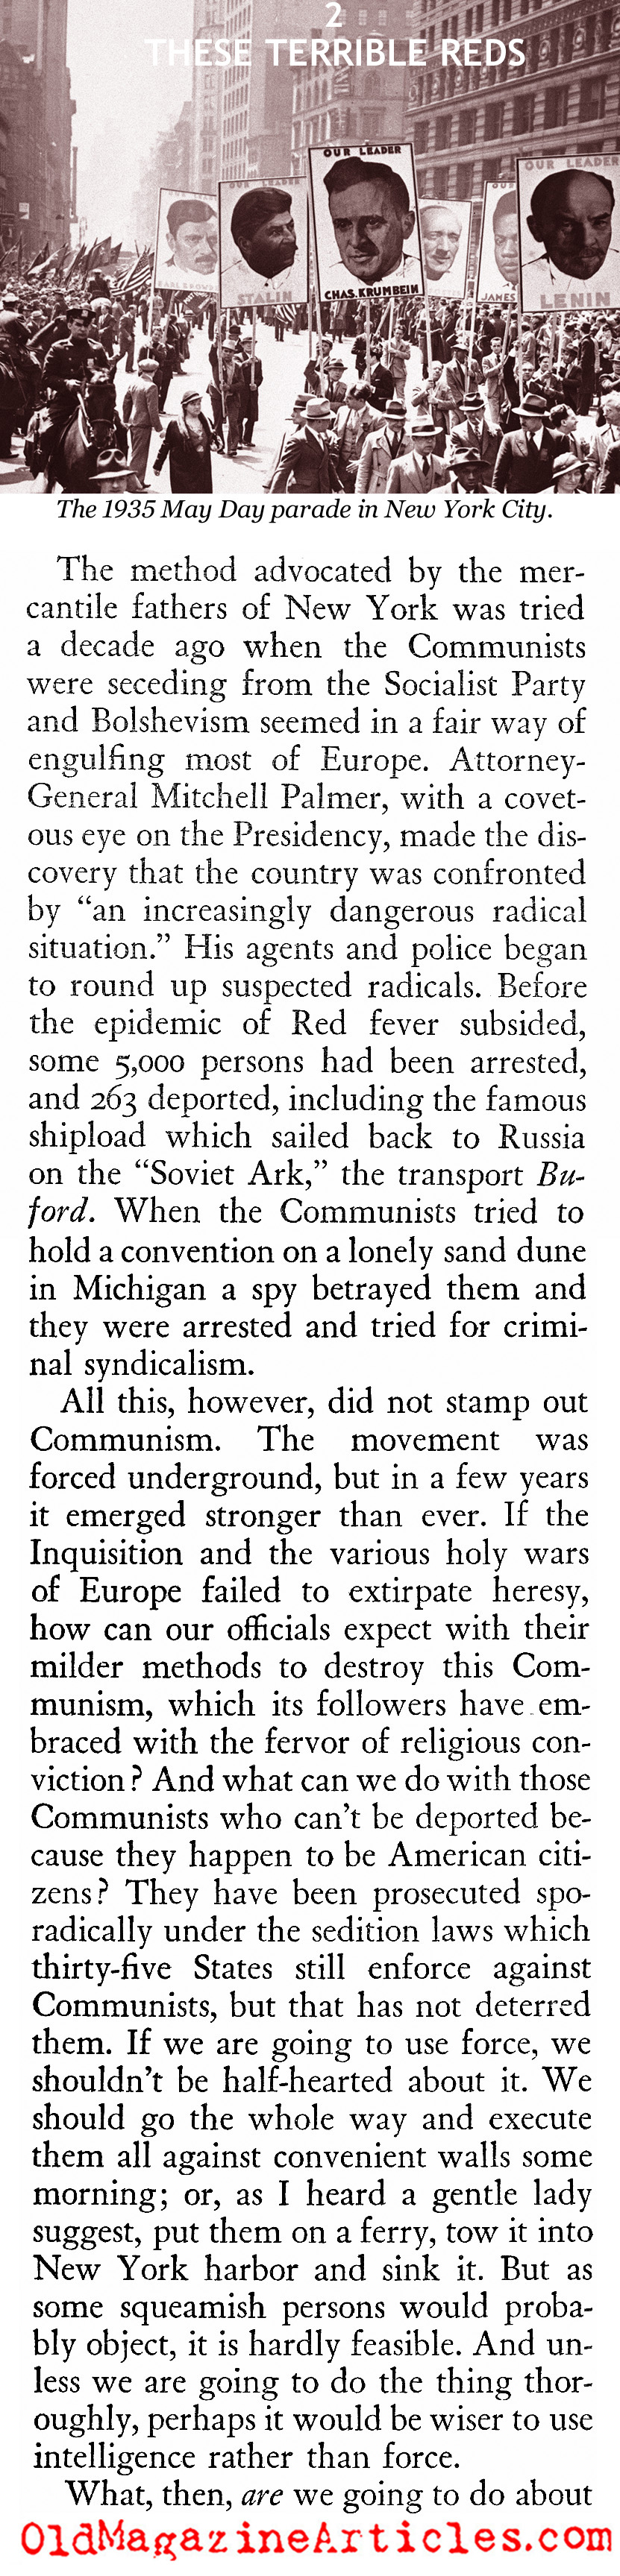 Reds Among Us (Scribner's Magazine, 1930)